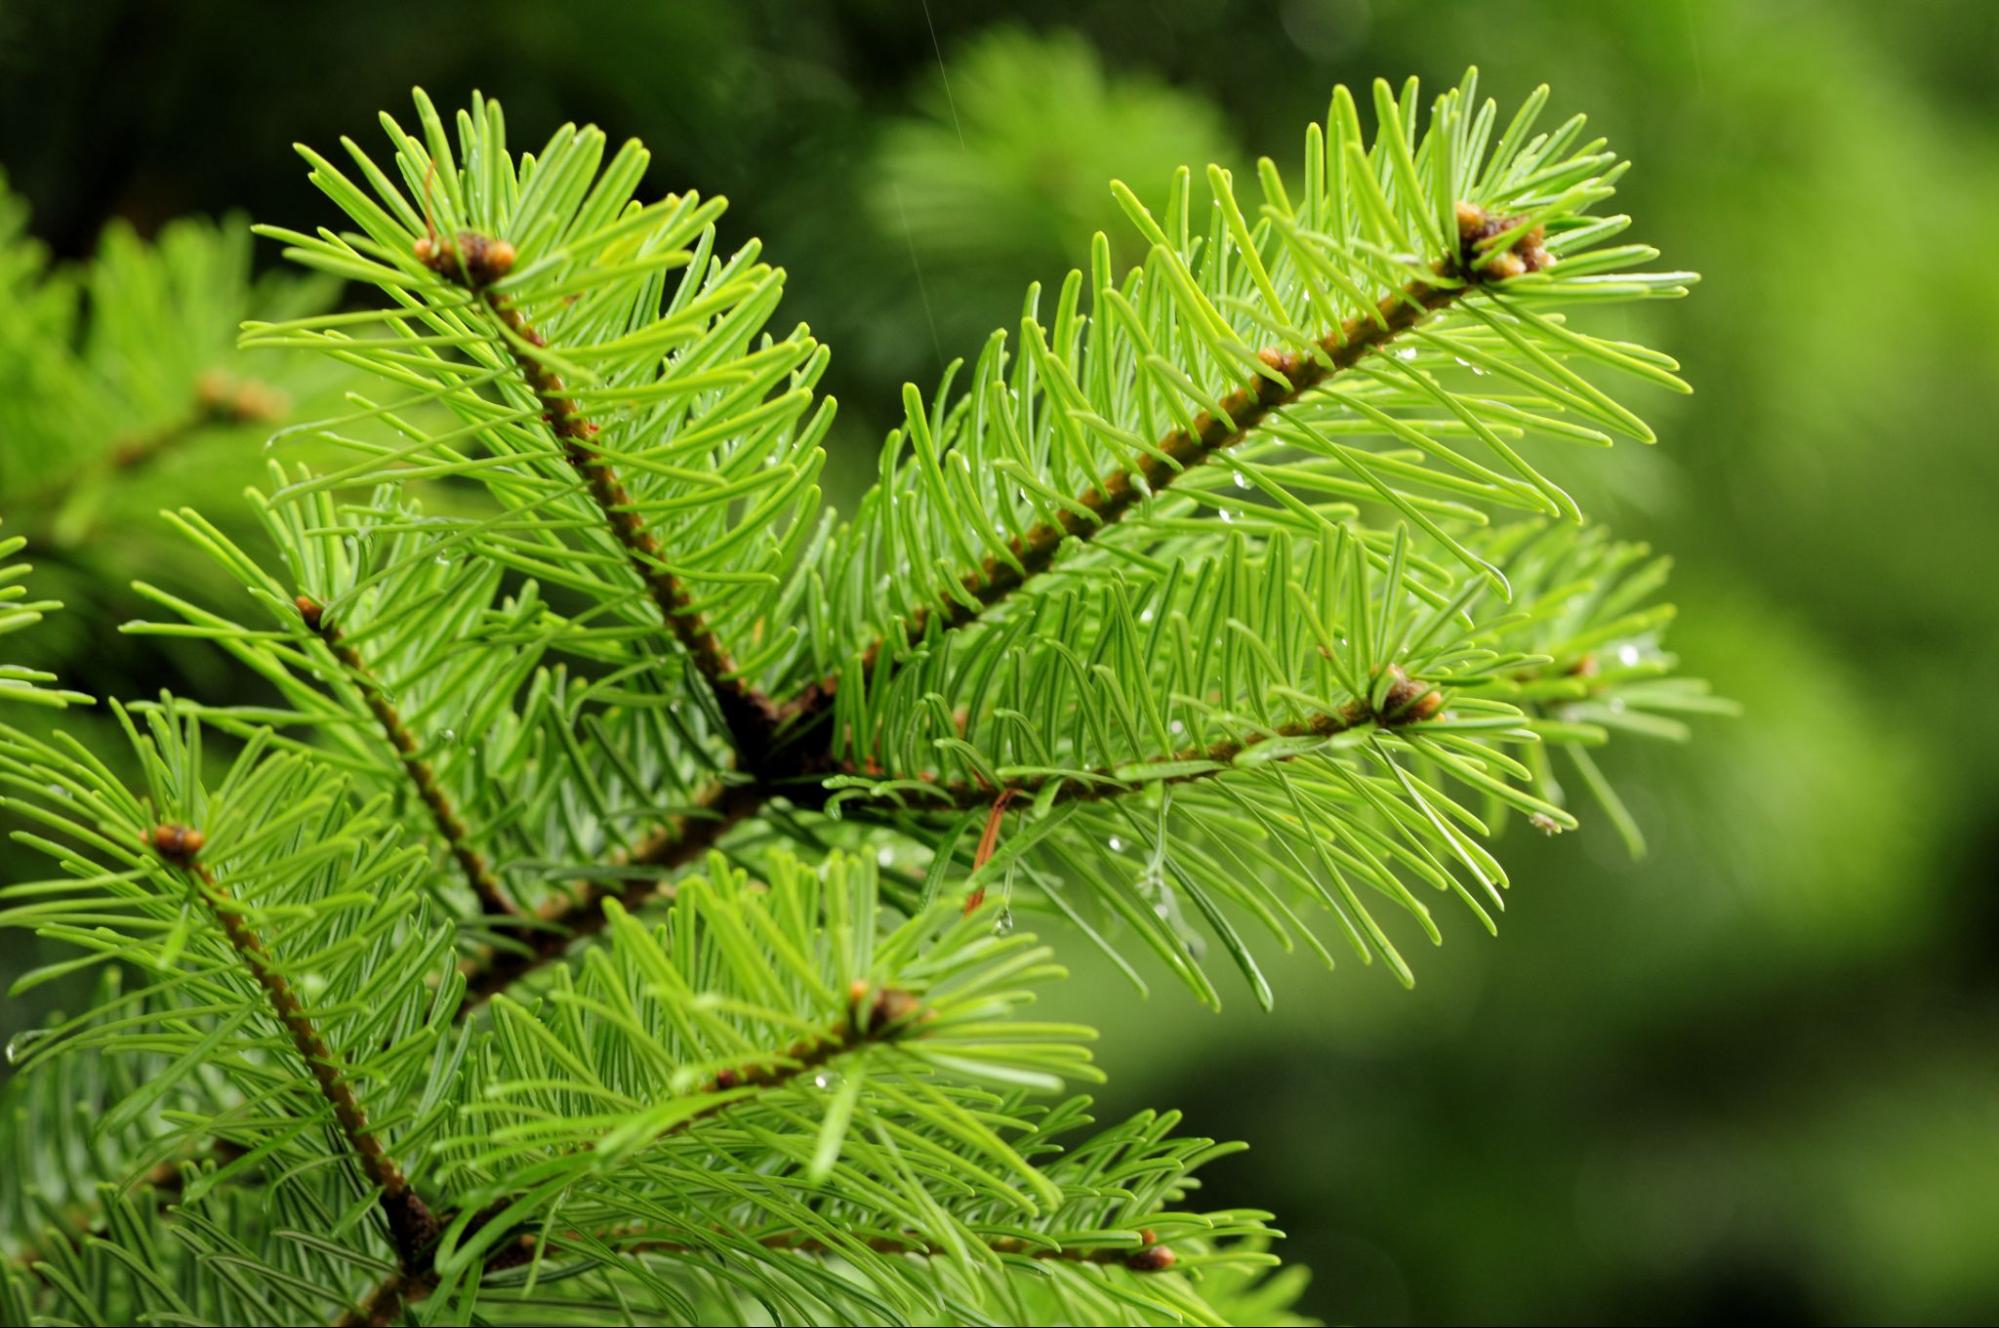 The needles of a Douglas fir Christmas tree